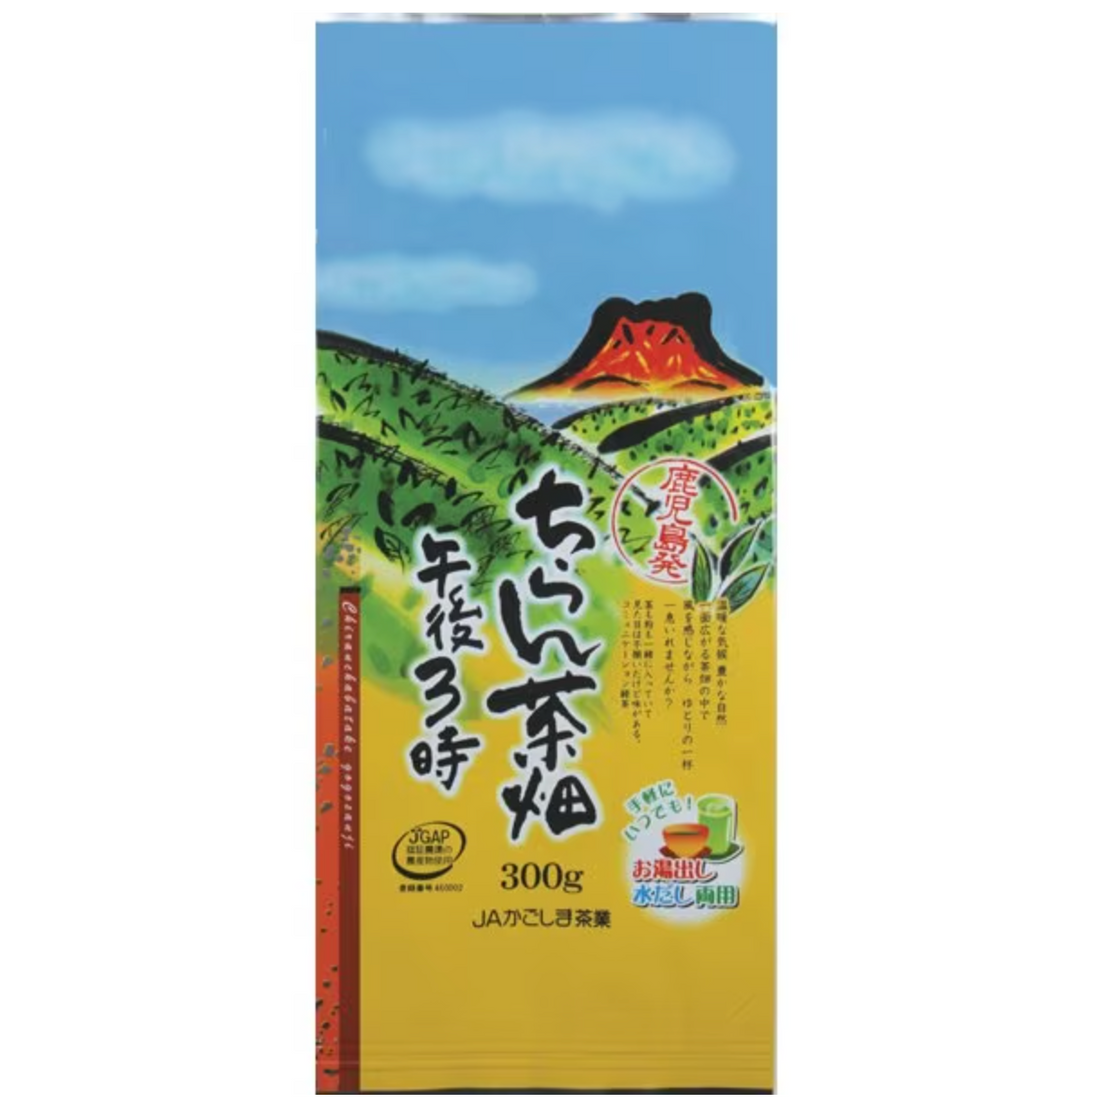 JA Kagoshima Tea Industry Charan Tea Farm 3pm 300g